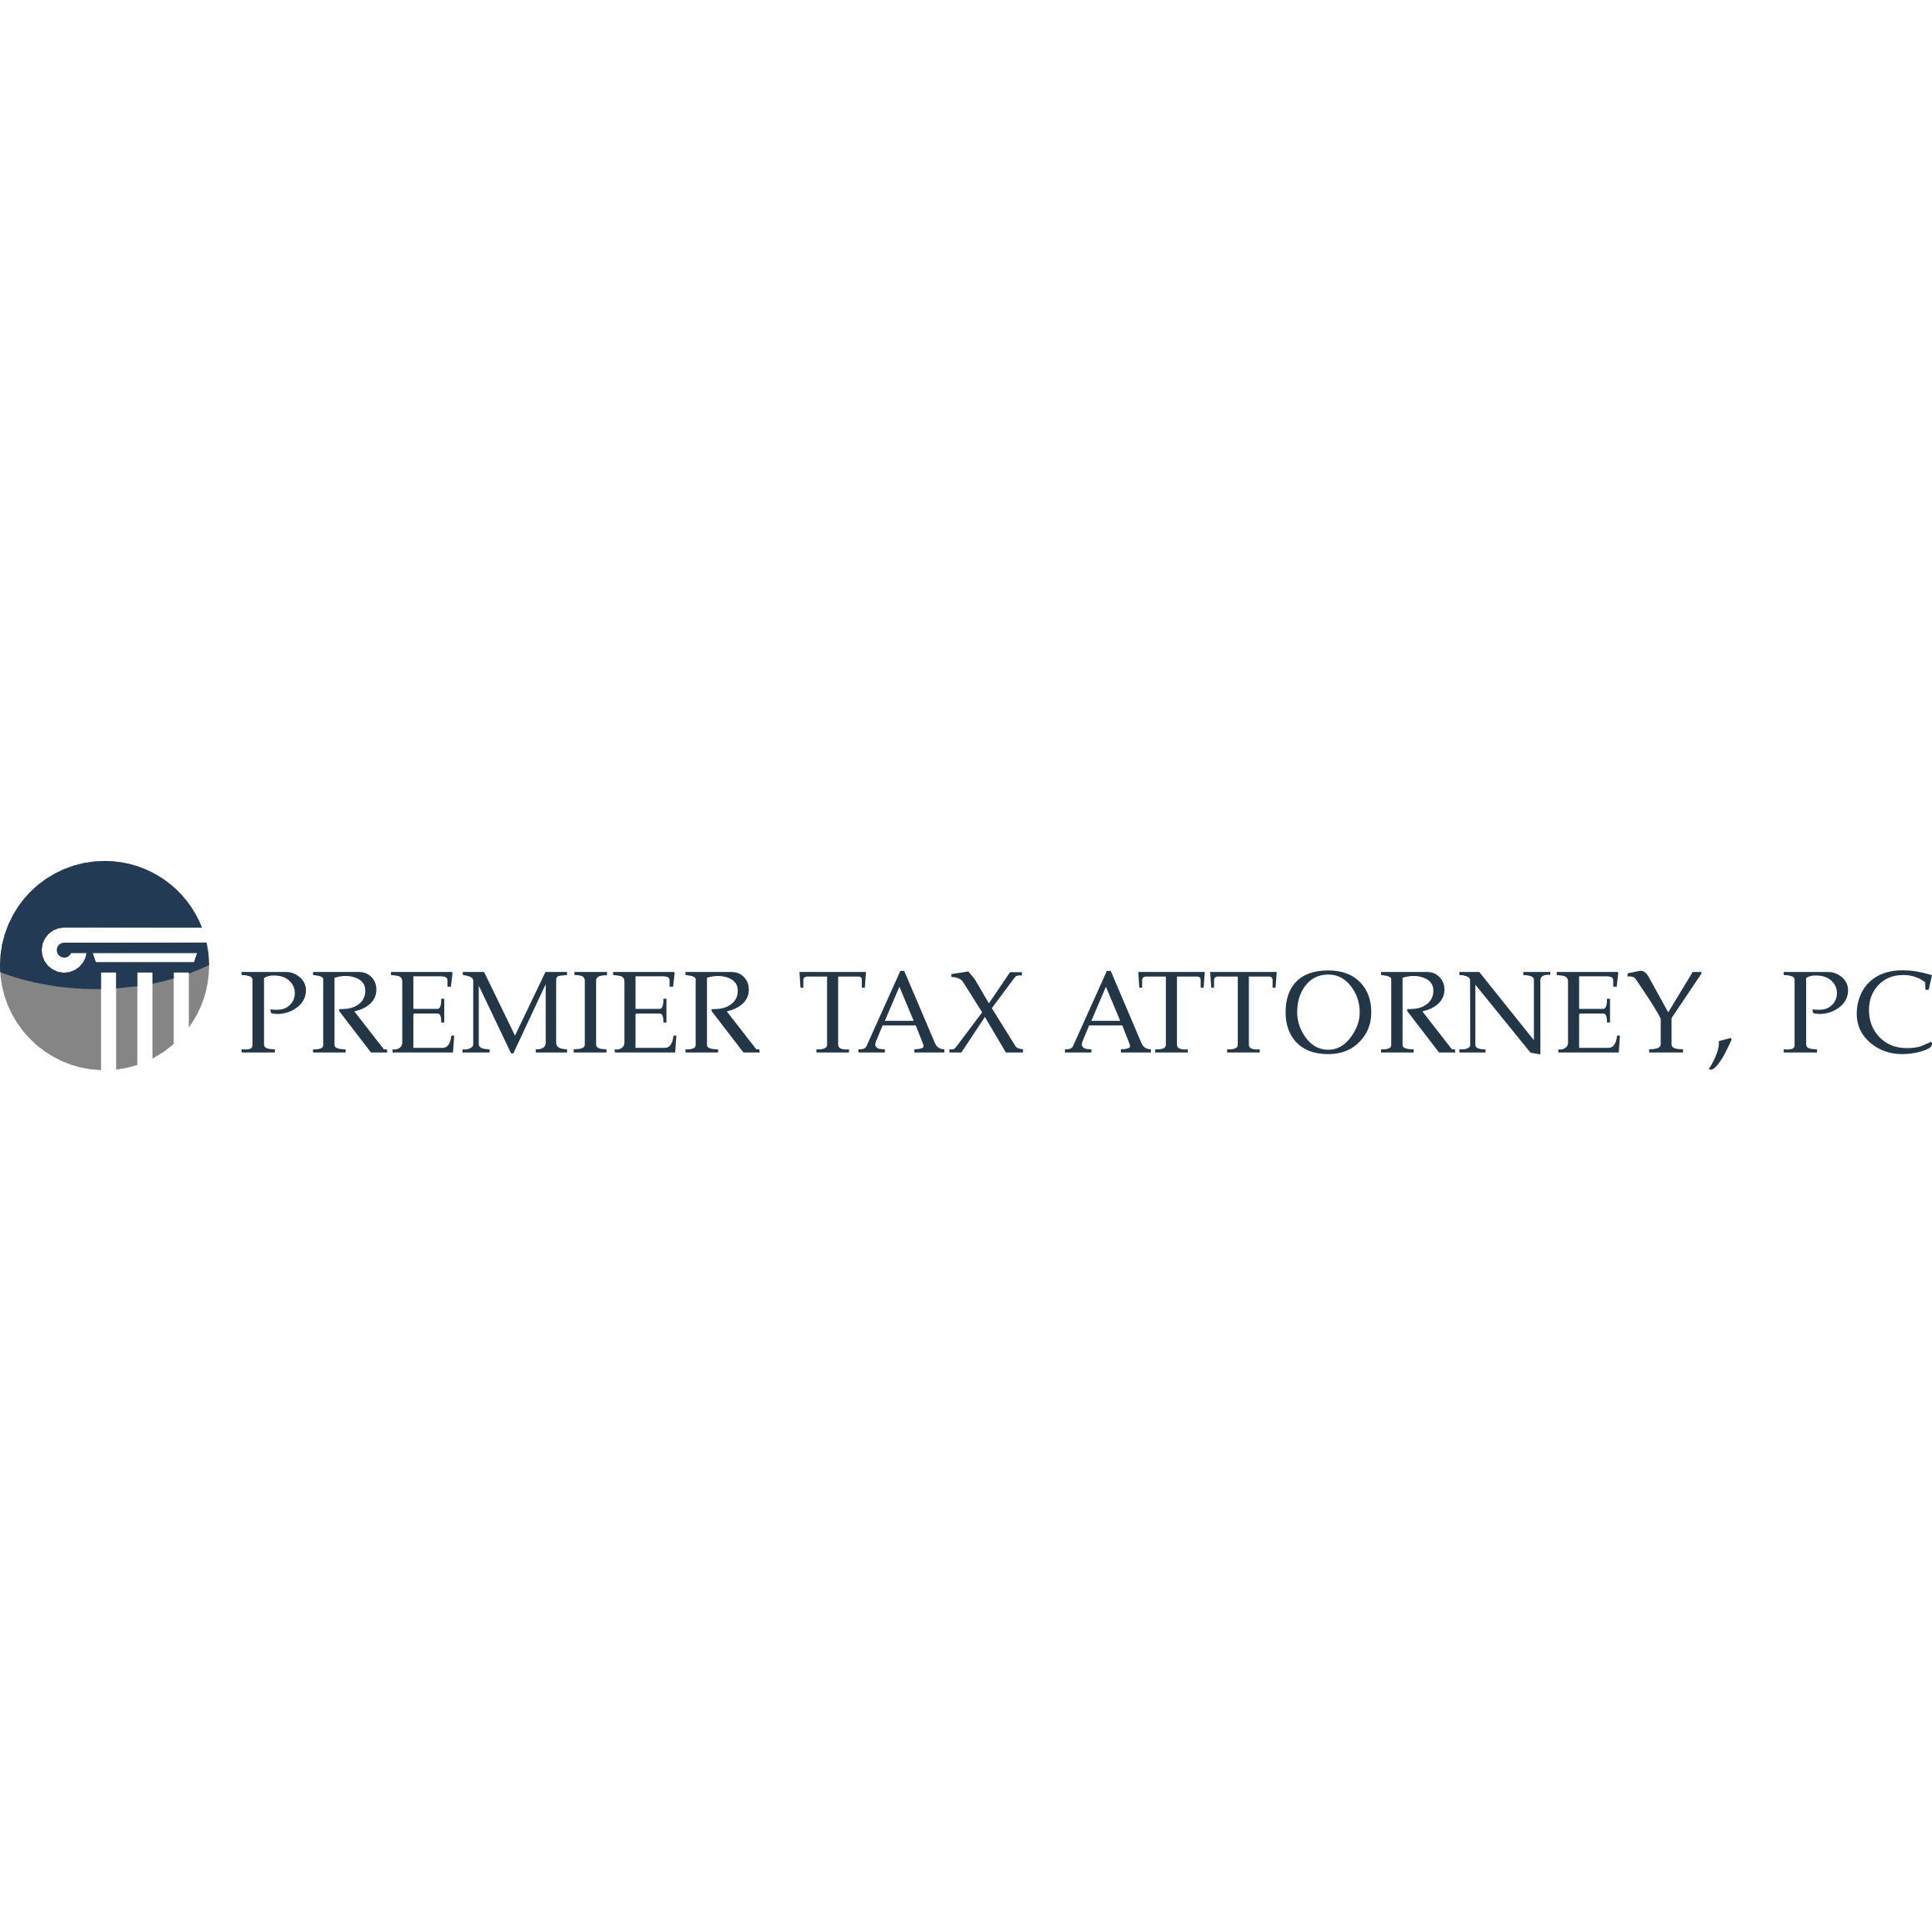 Premier Tax Attorney, PC - San Francisco, CA 94104 - (415)691-9953 | ShowMeLocal.com